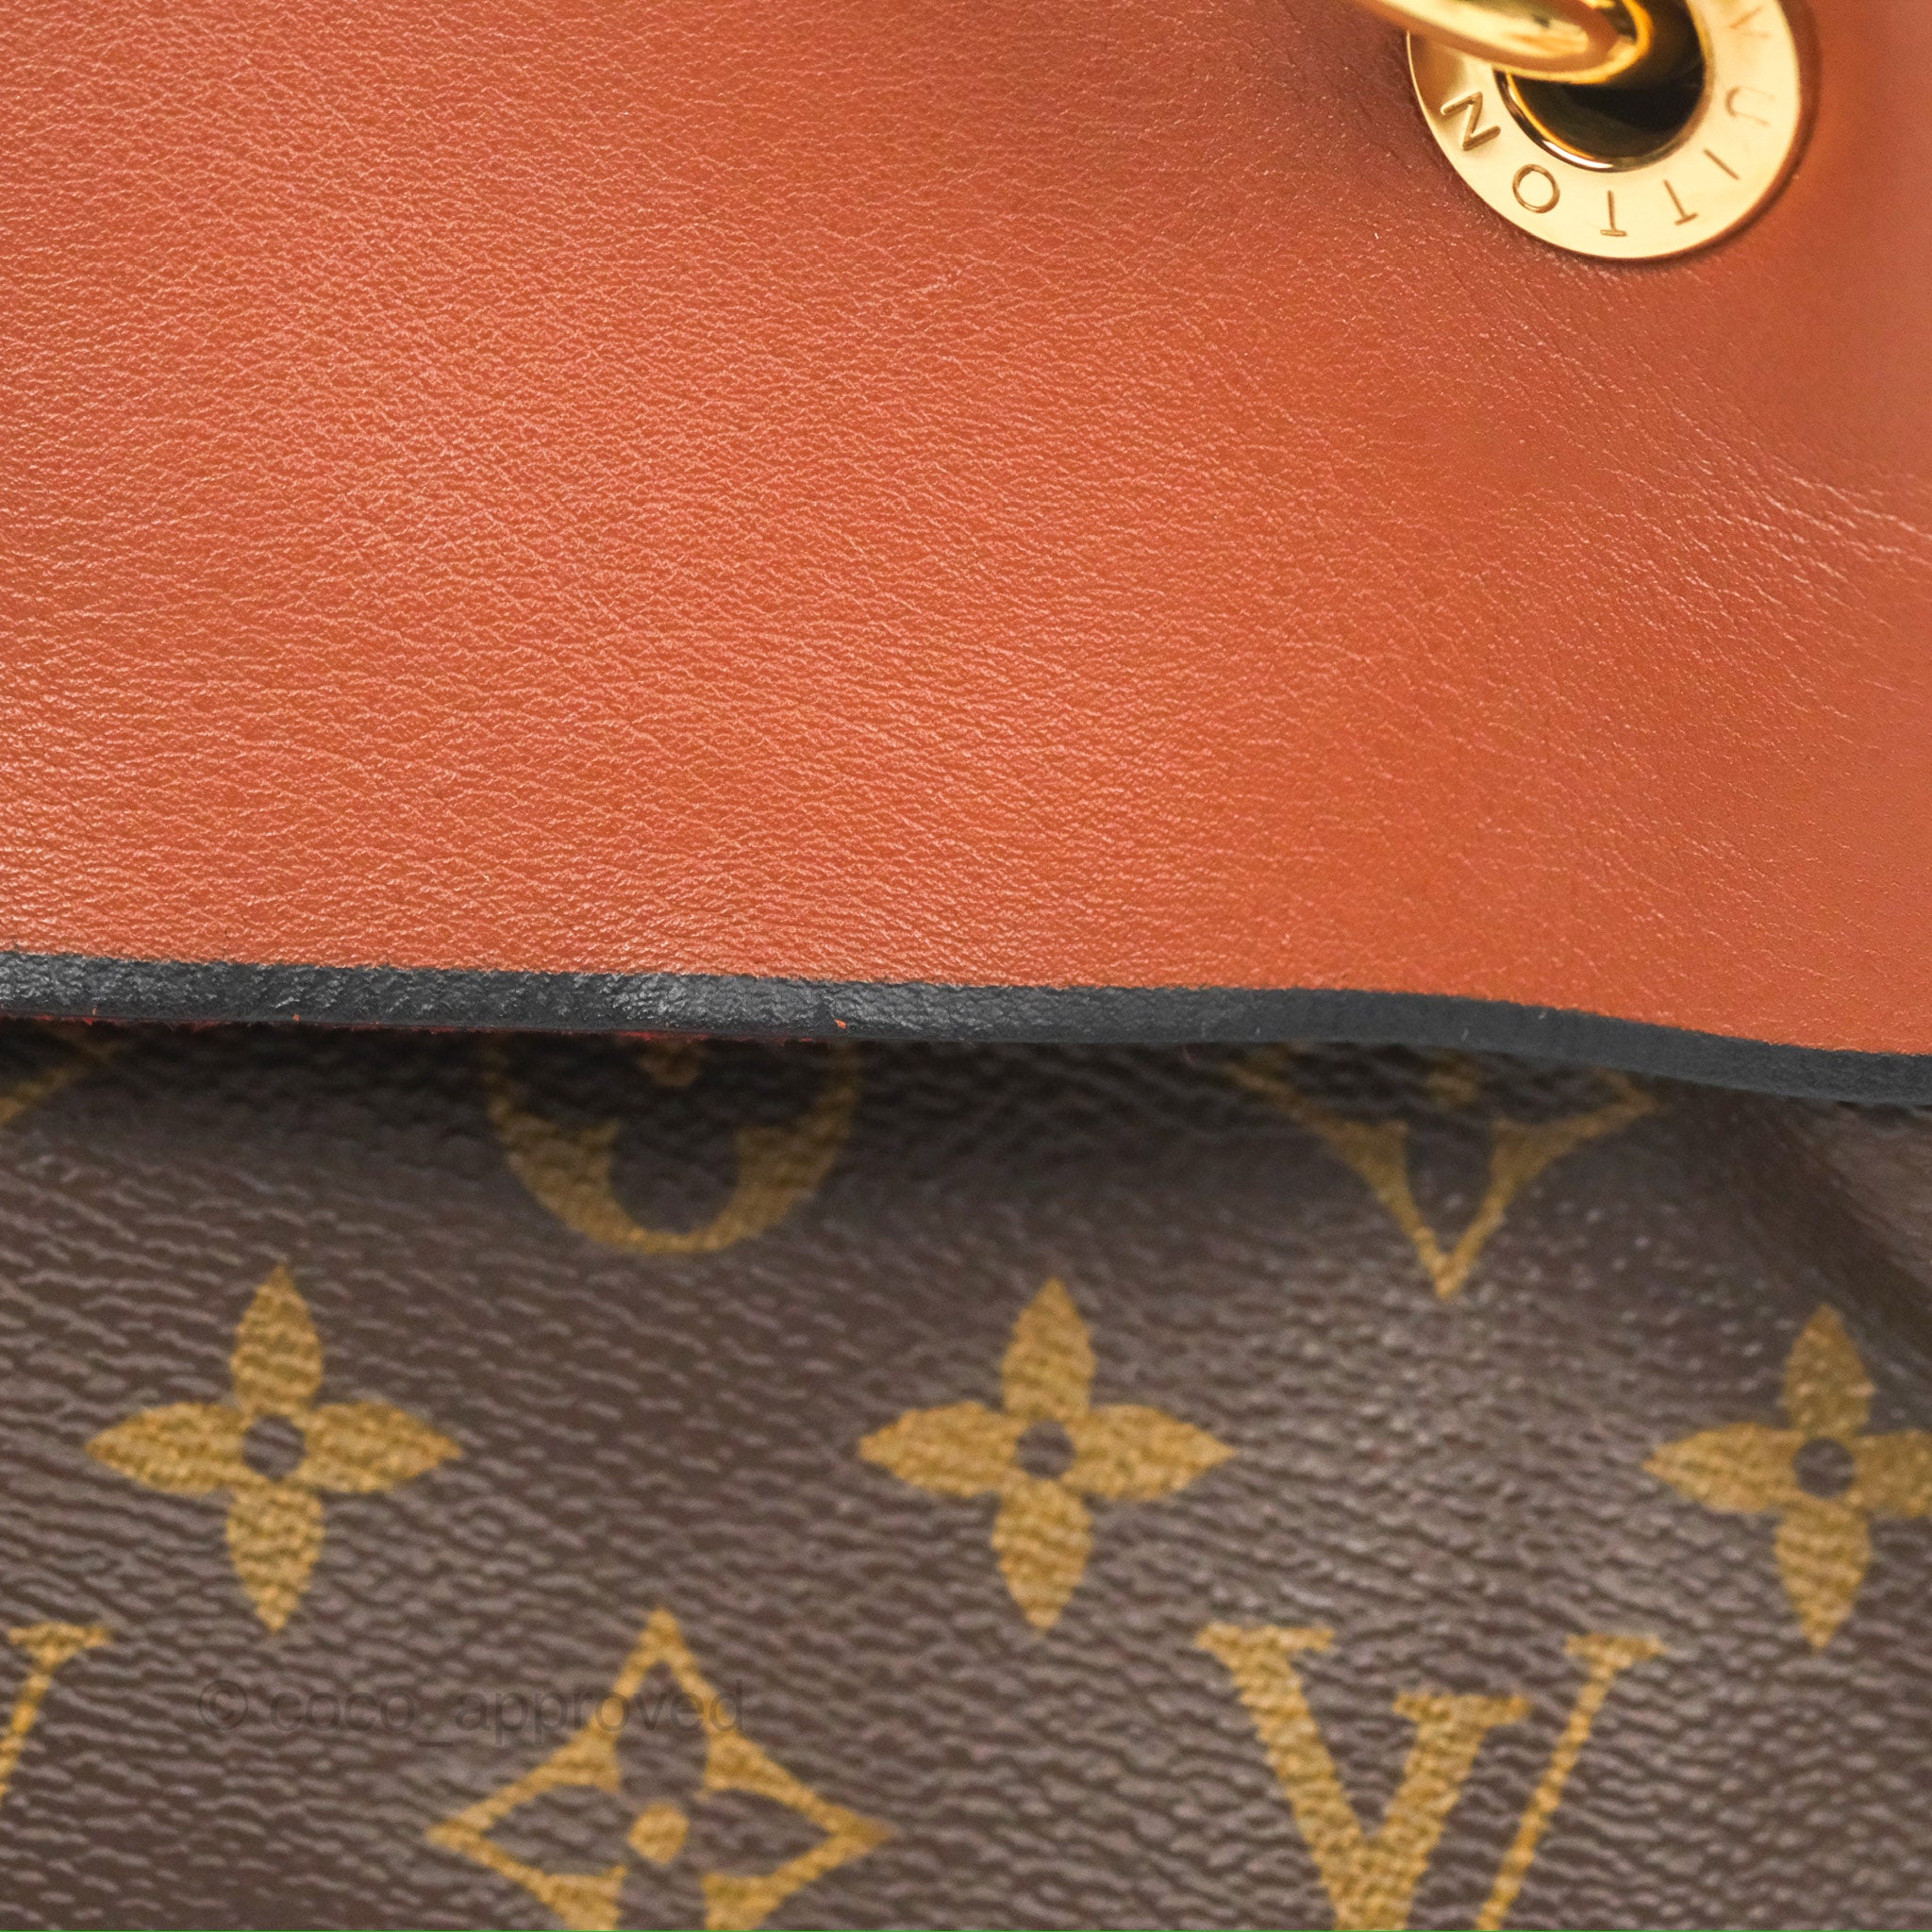 Louis Vuitton Tuileries Besace Bag Brown/Red Monogram – Coco Approved Studio